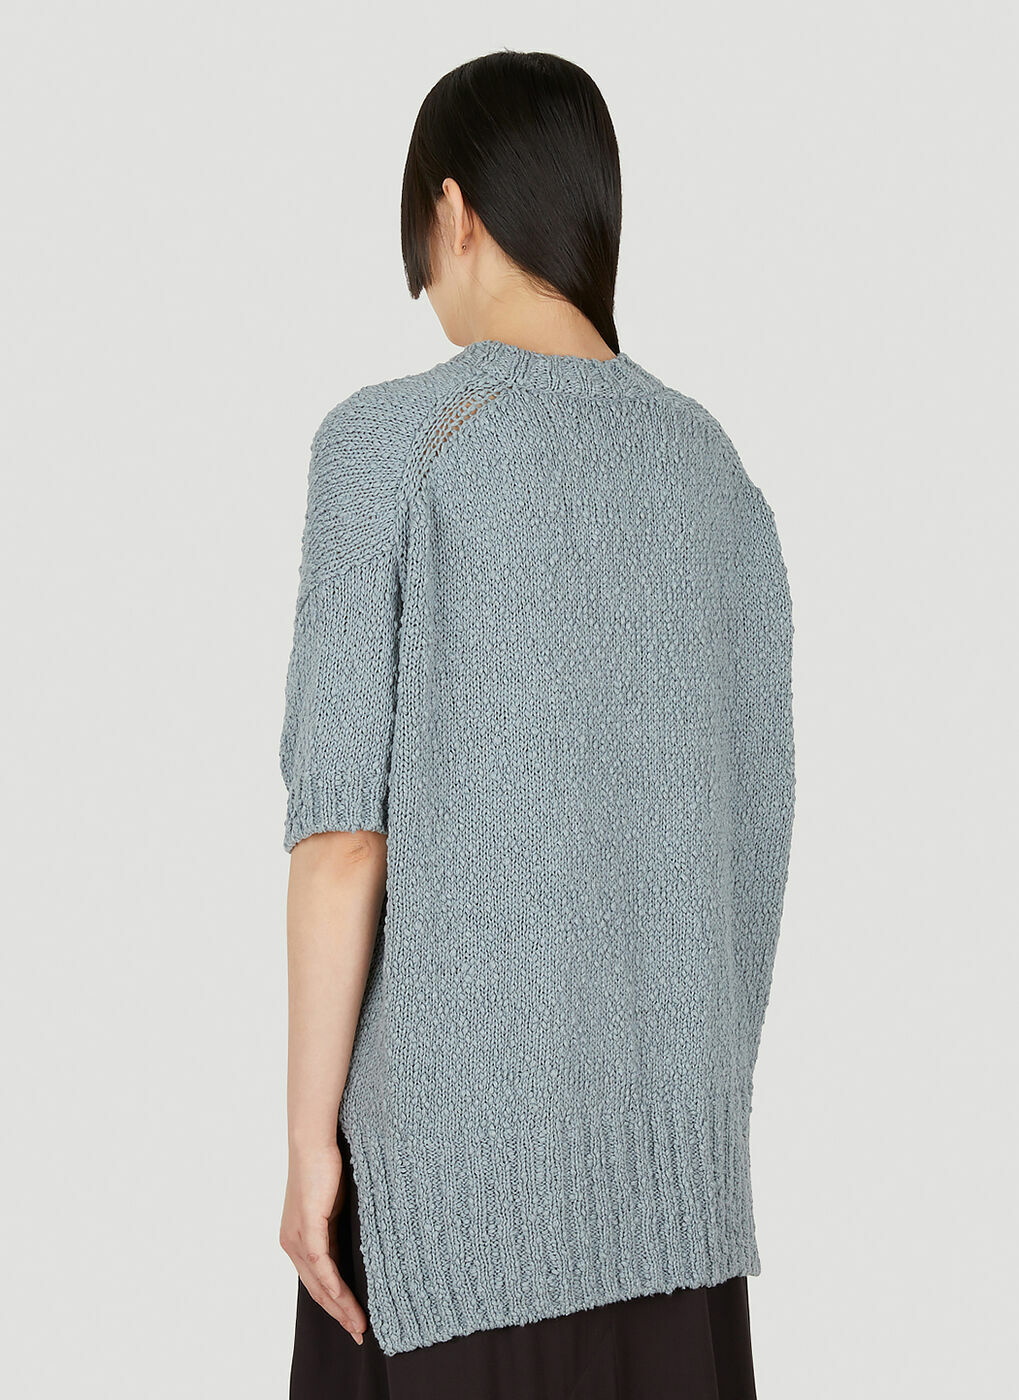 Boucle Knit Sweater in Grey Studio Nicholson